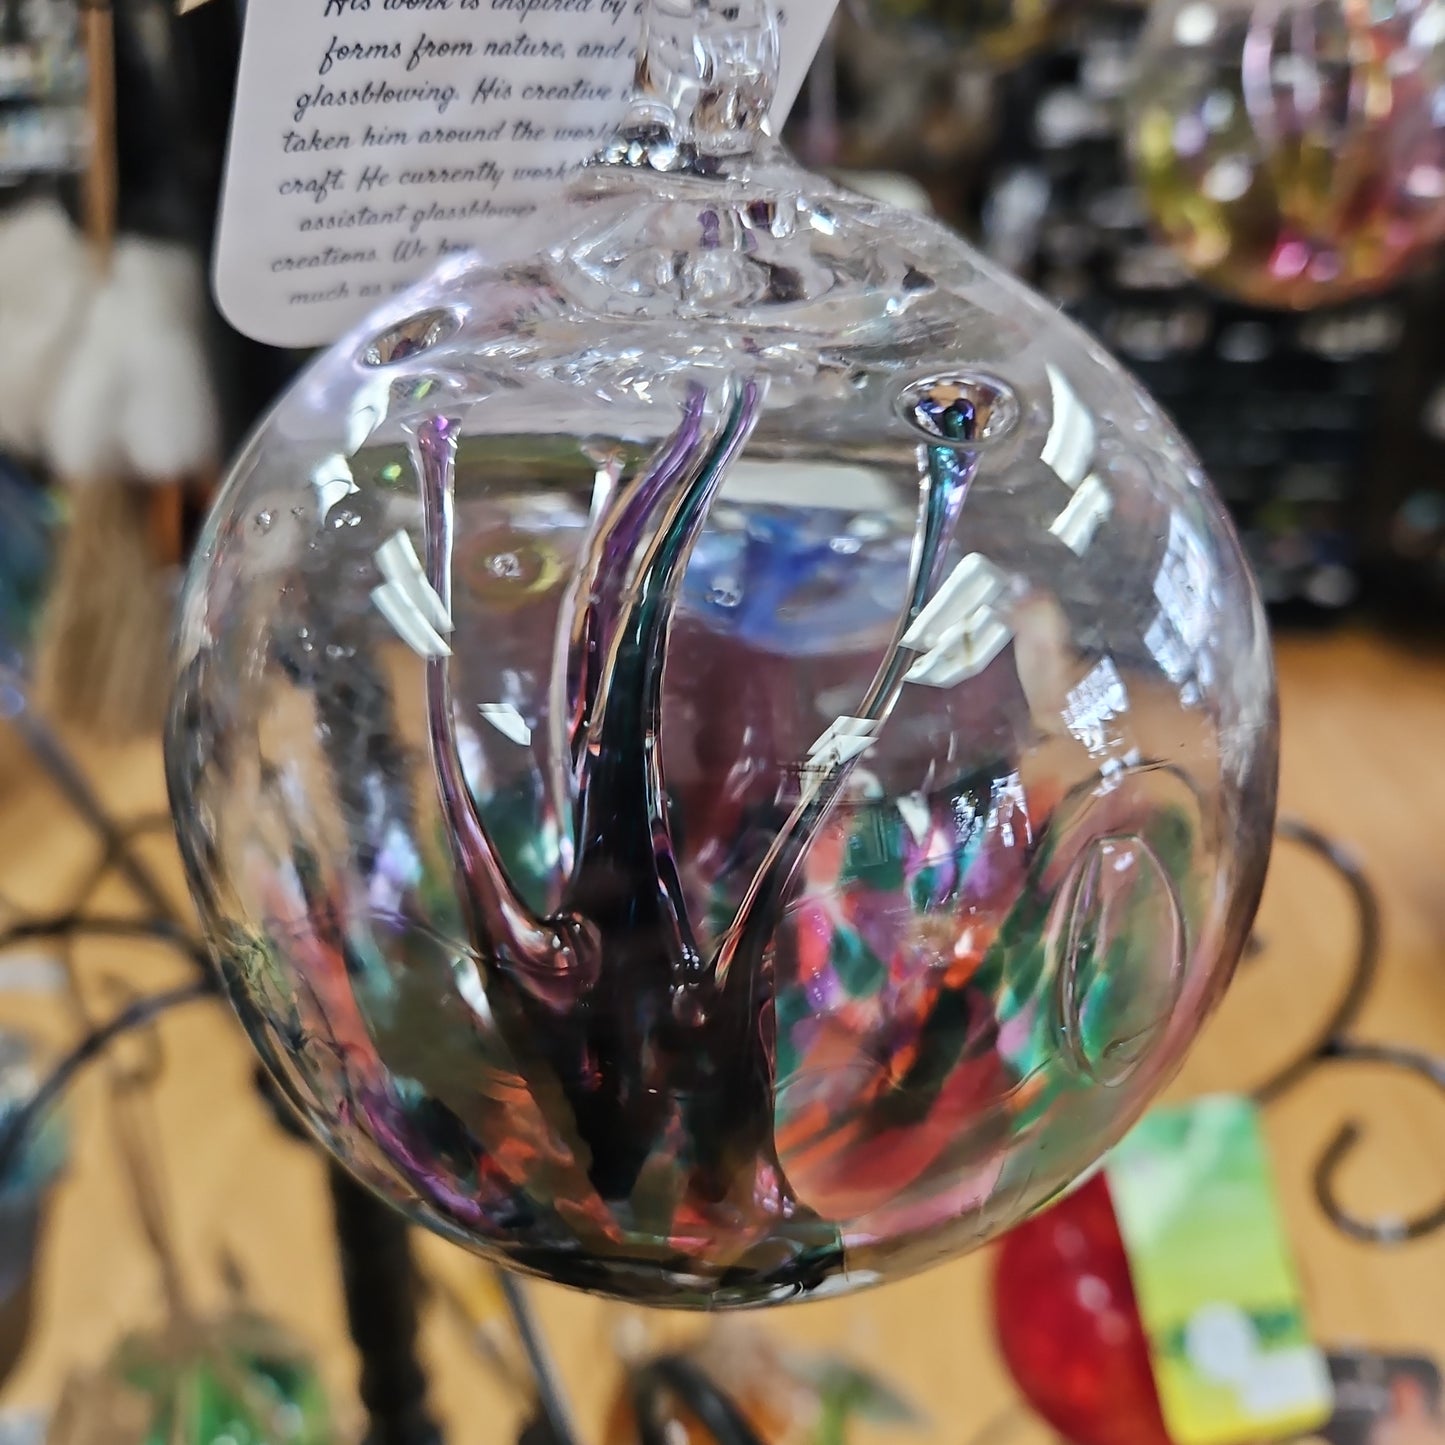 Blown Glass Wish Ball by Luke Adams 4" - Suncatcher / Witchball